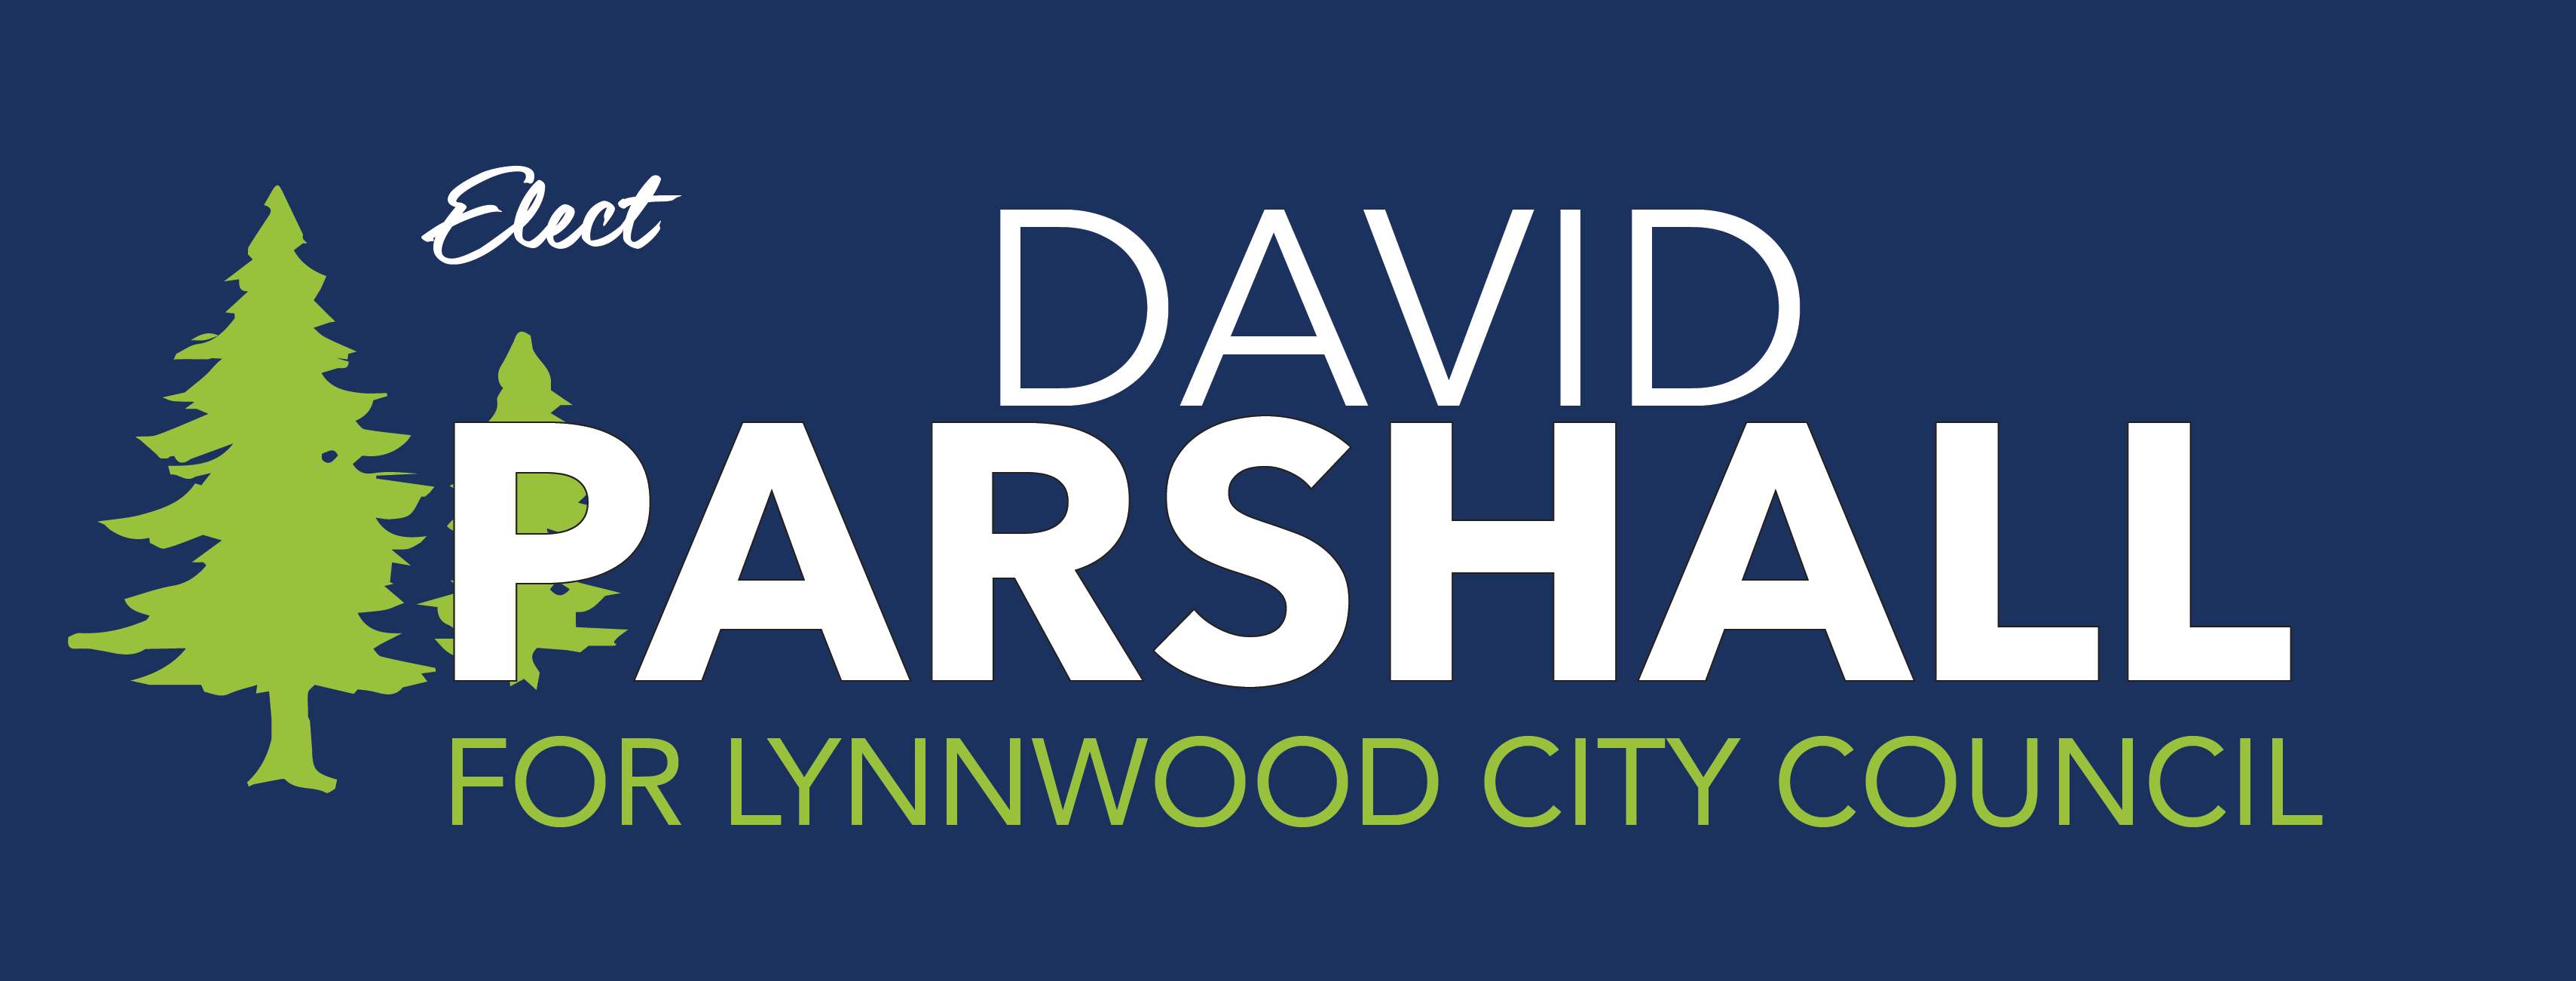 David Parshall For Lynnwood